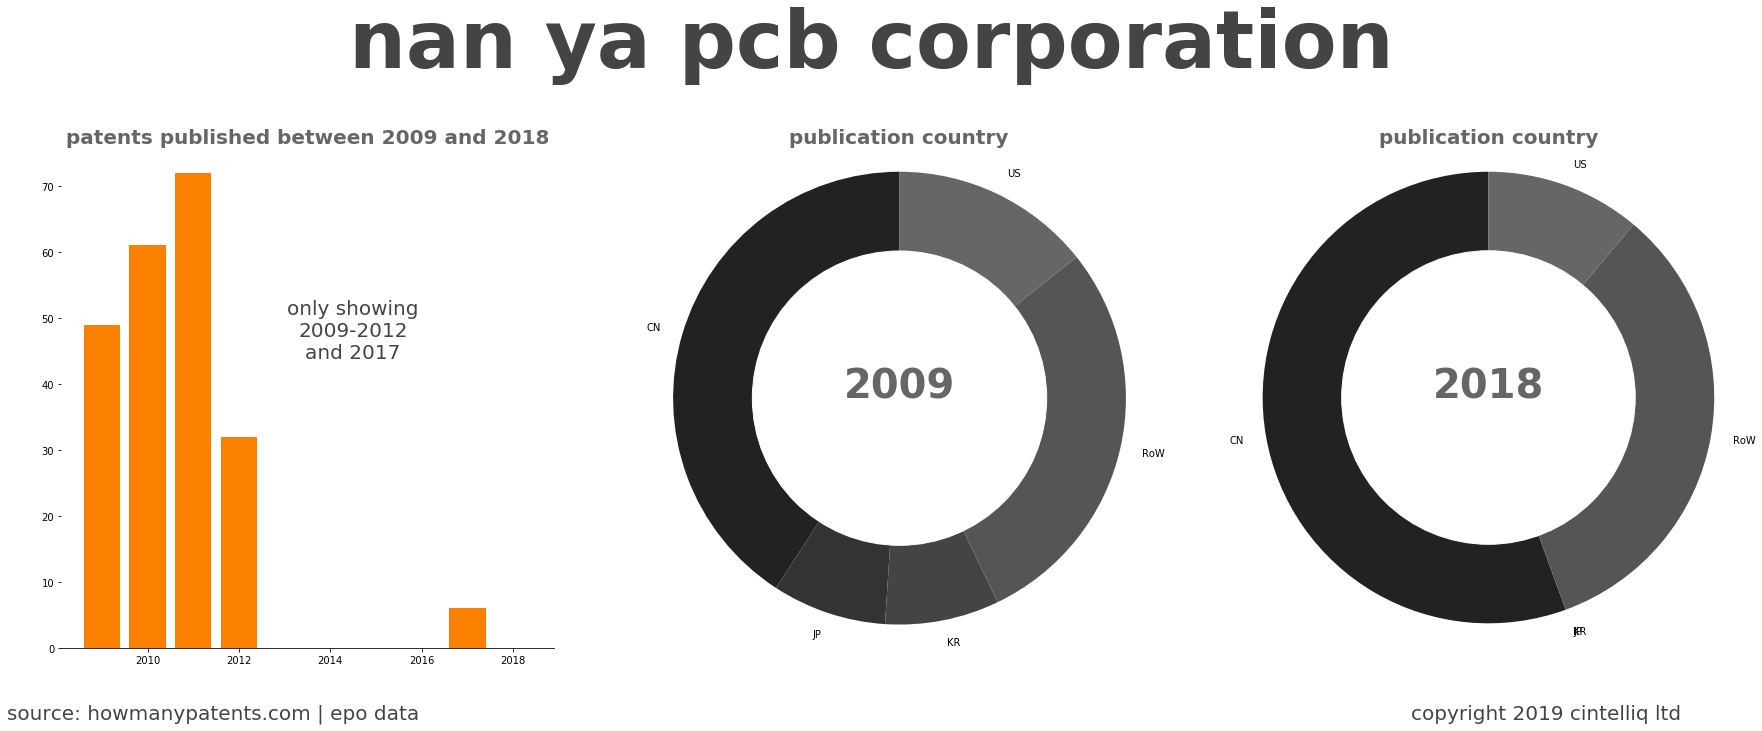 summary of patents for Nan Ya Pcb Corporation